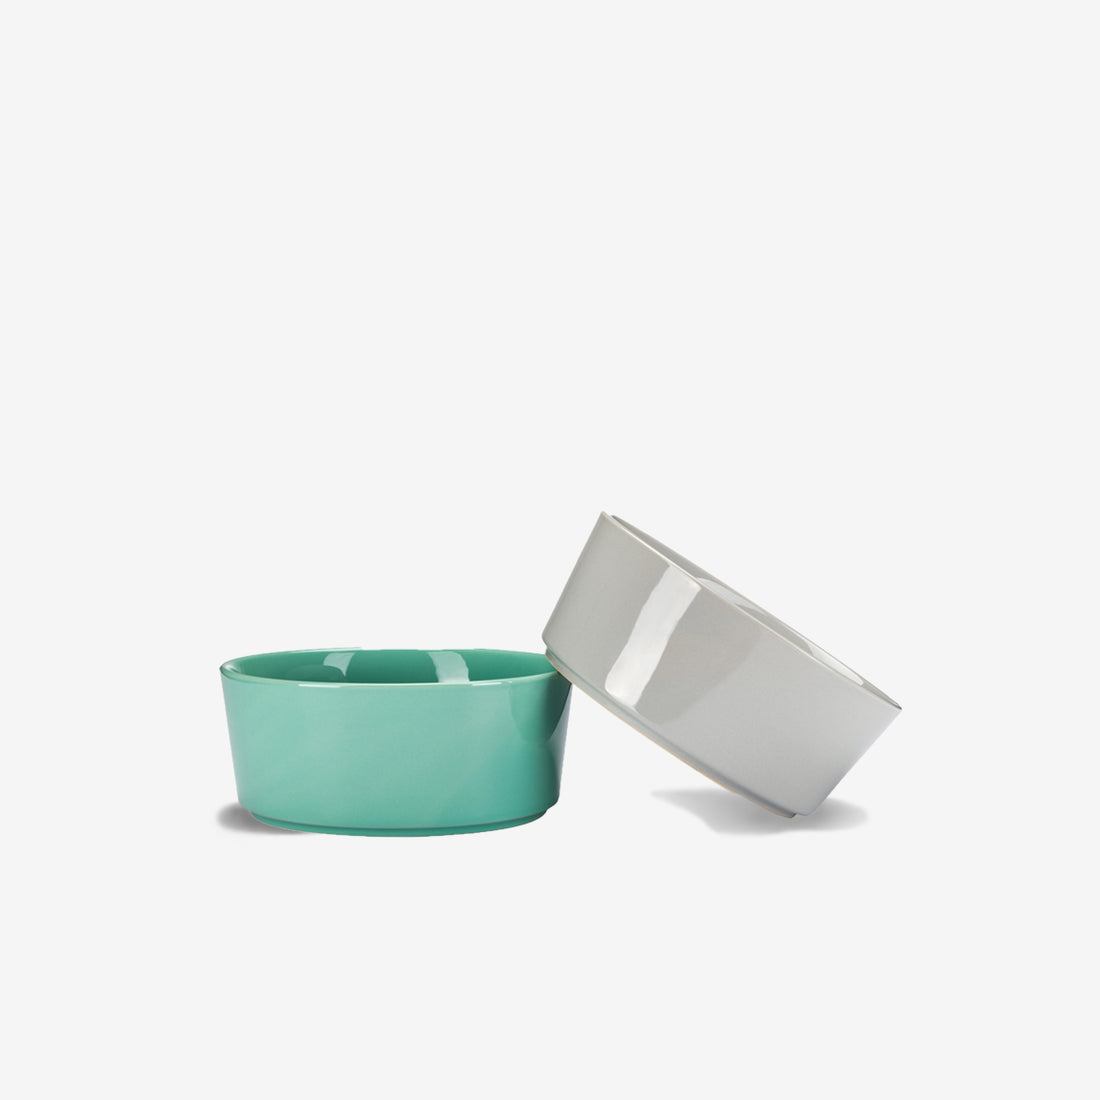 Simple Solid Bowl Light Grey - Waggo 